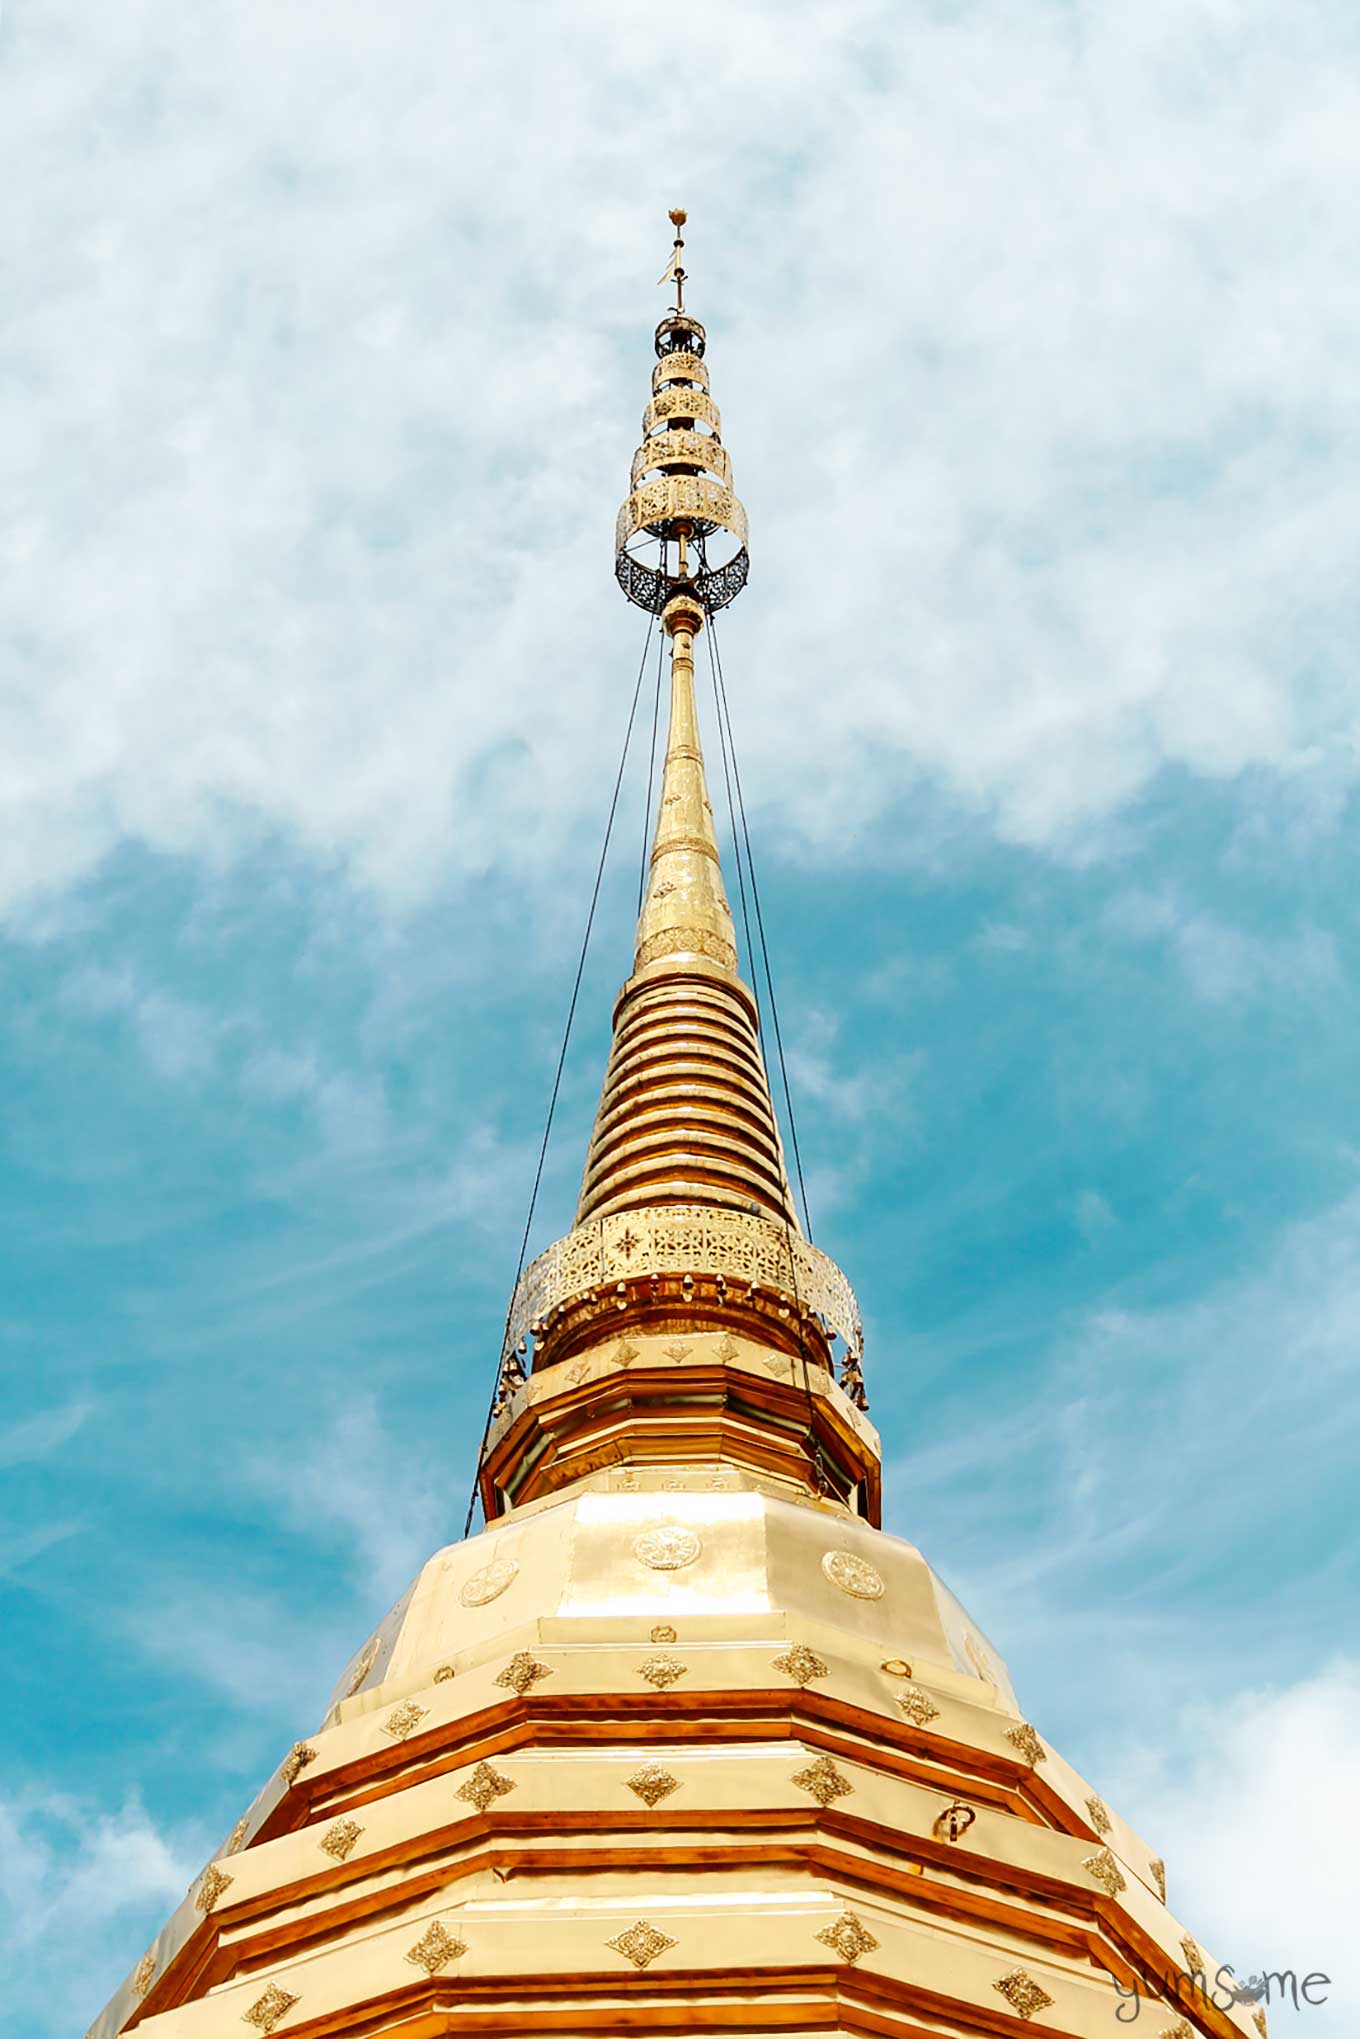 The pinnacle of the chedi at Wat Phra That Doi Suthep.